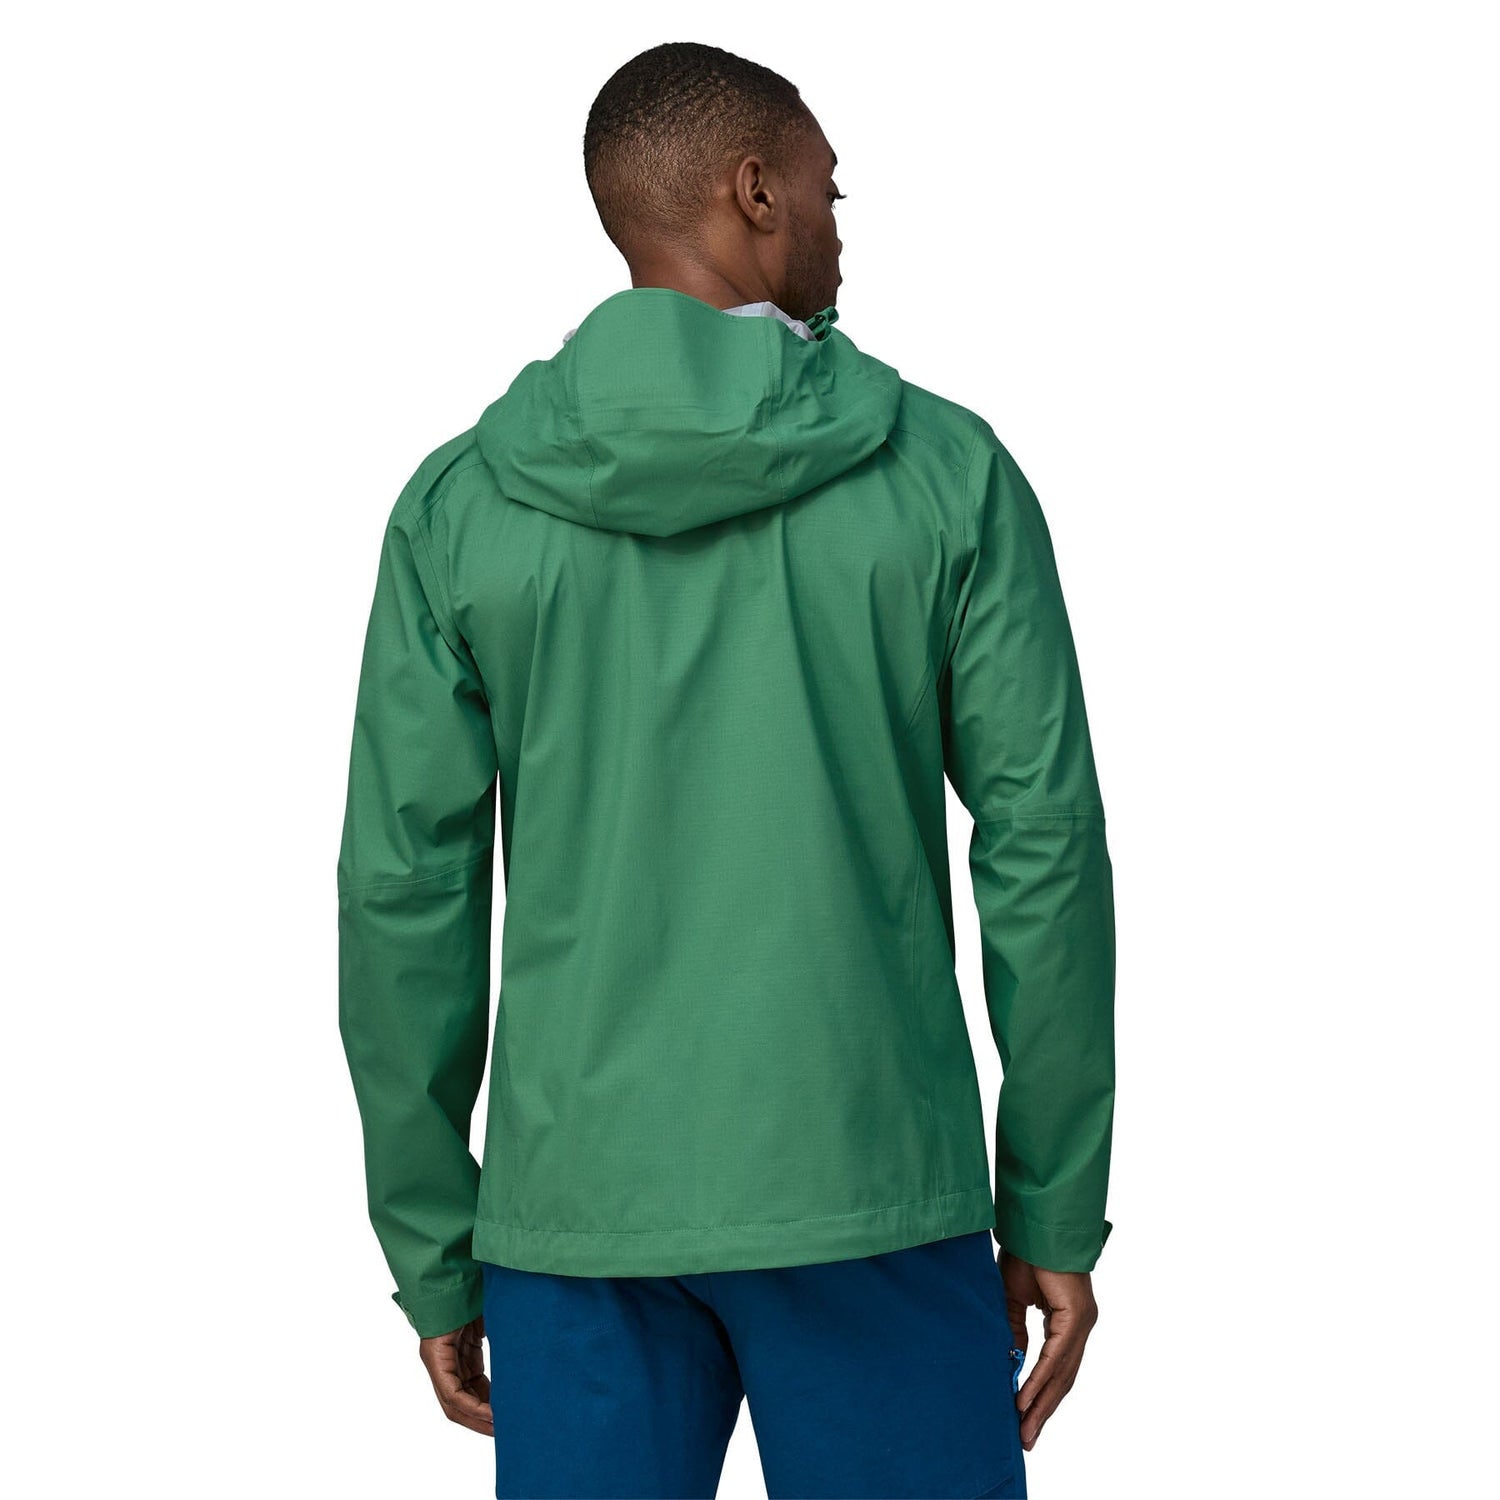 Patagonia M's Granite Crest Shell Jacket - 100% Recycled Nylon Gather Green M Jacket